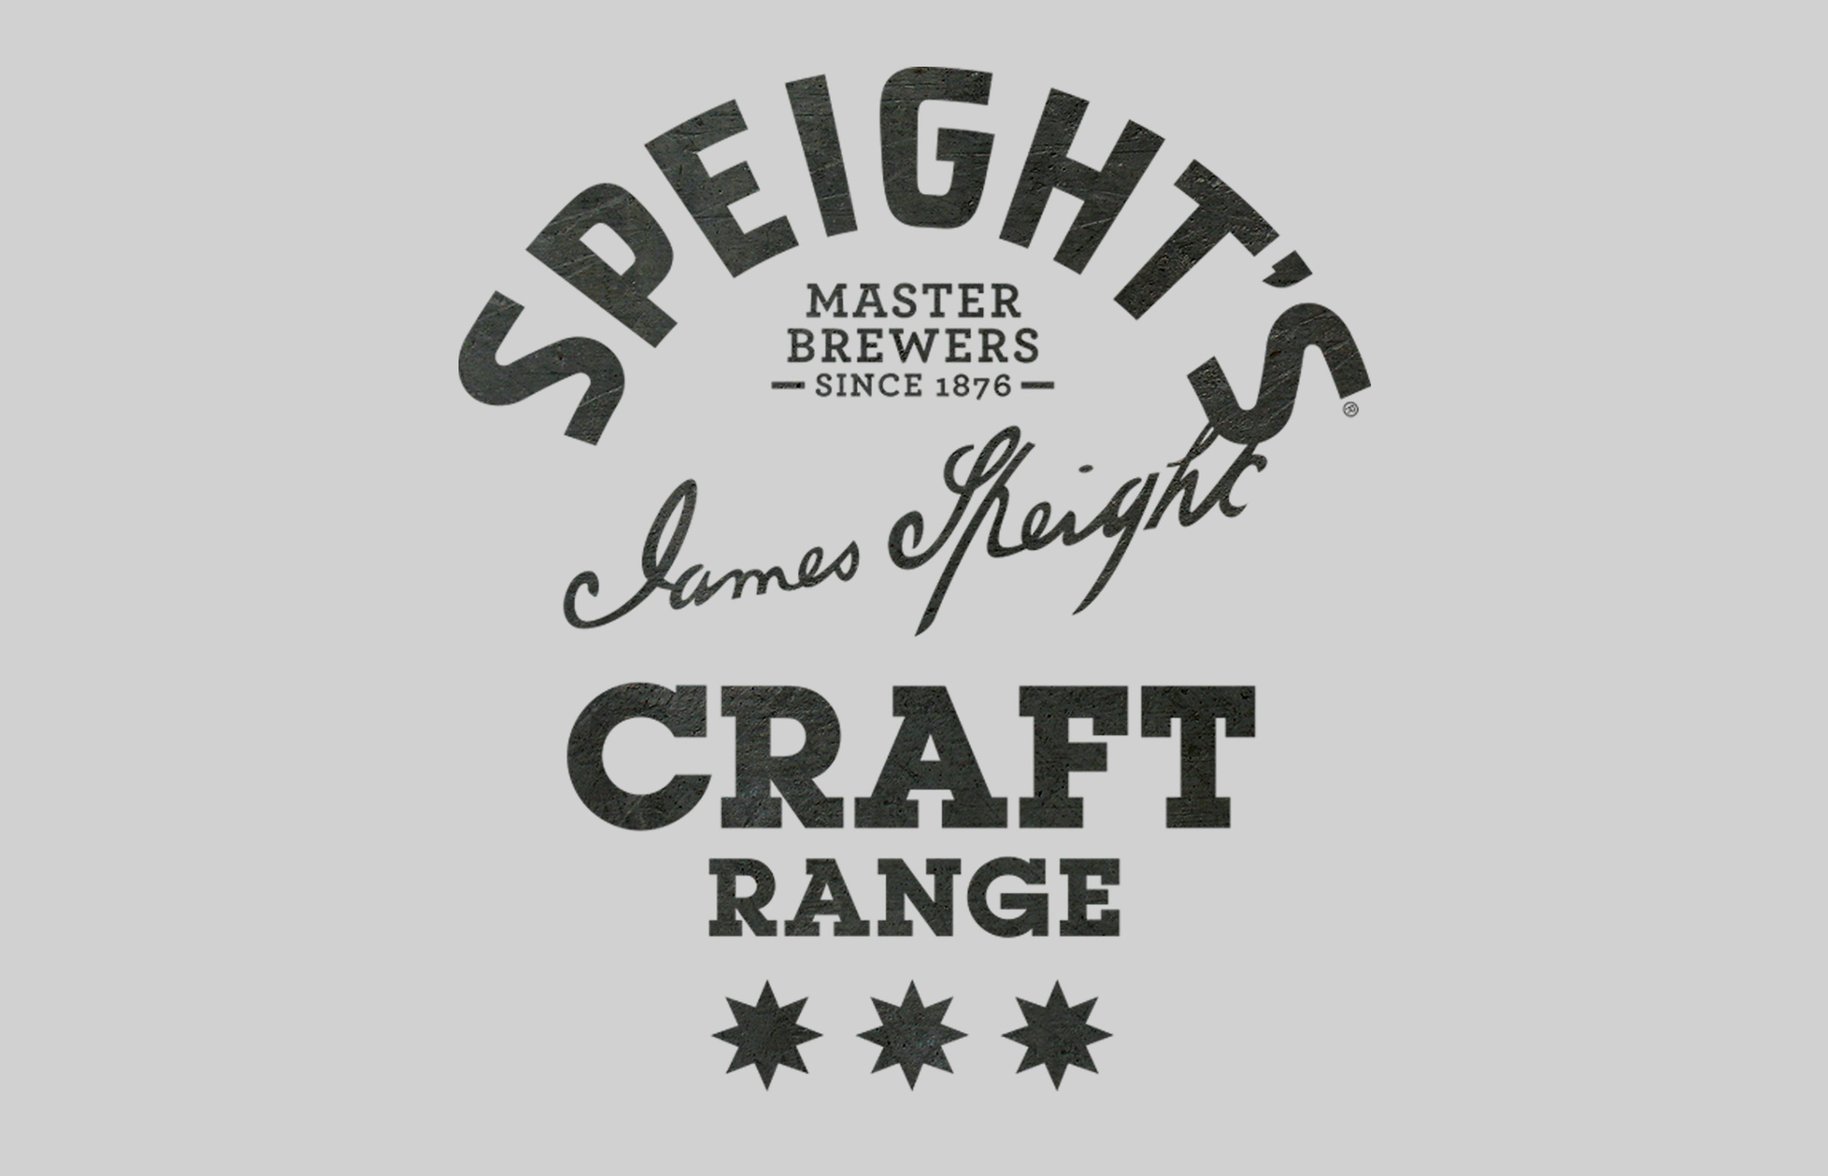 Speight's craft range logo graphic